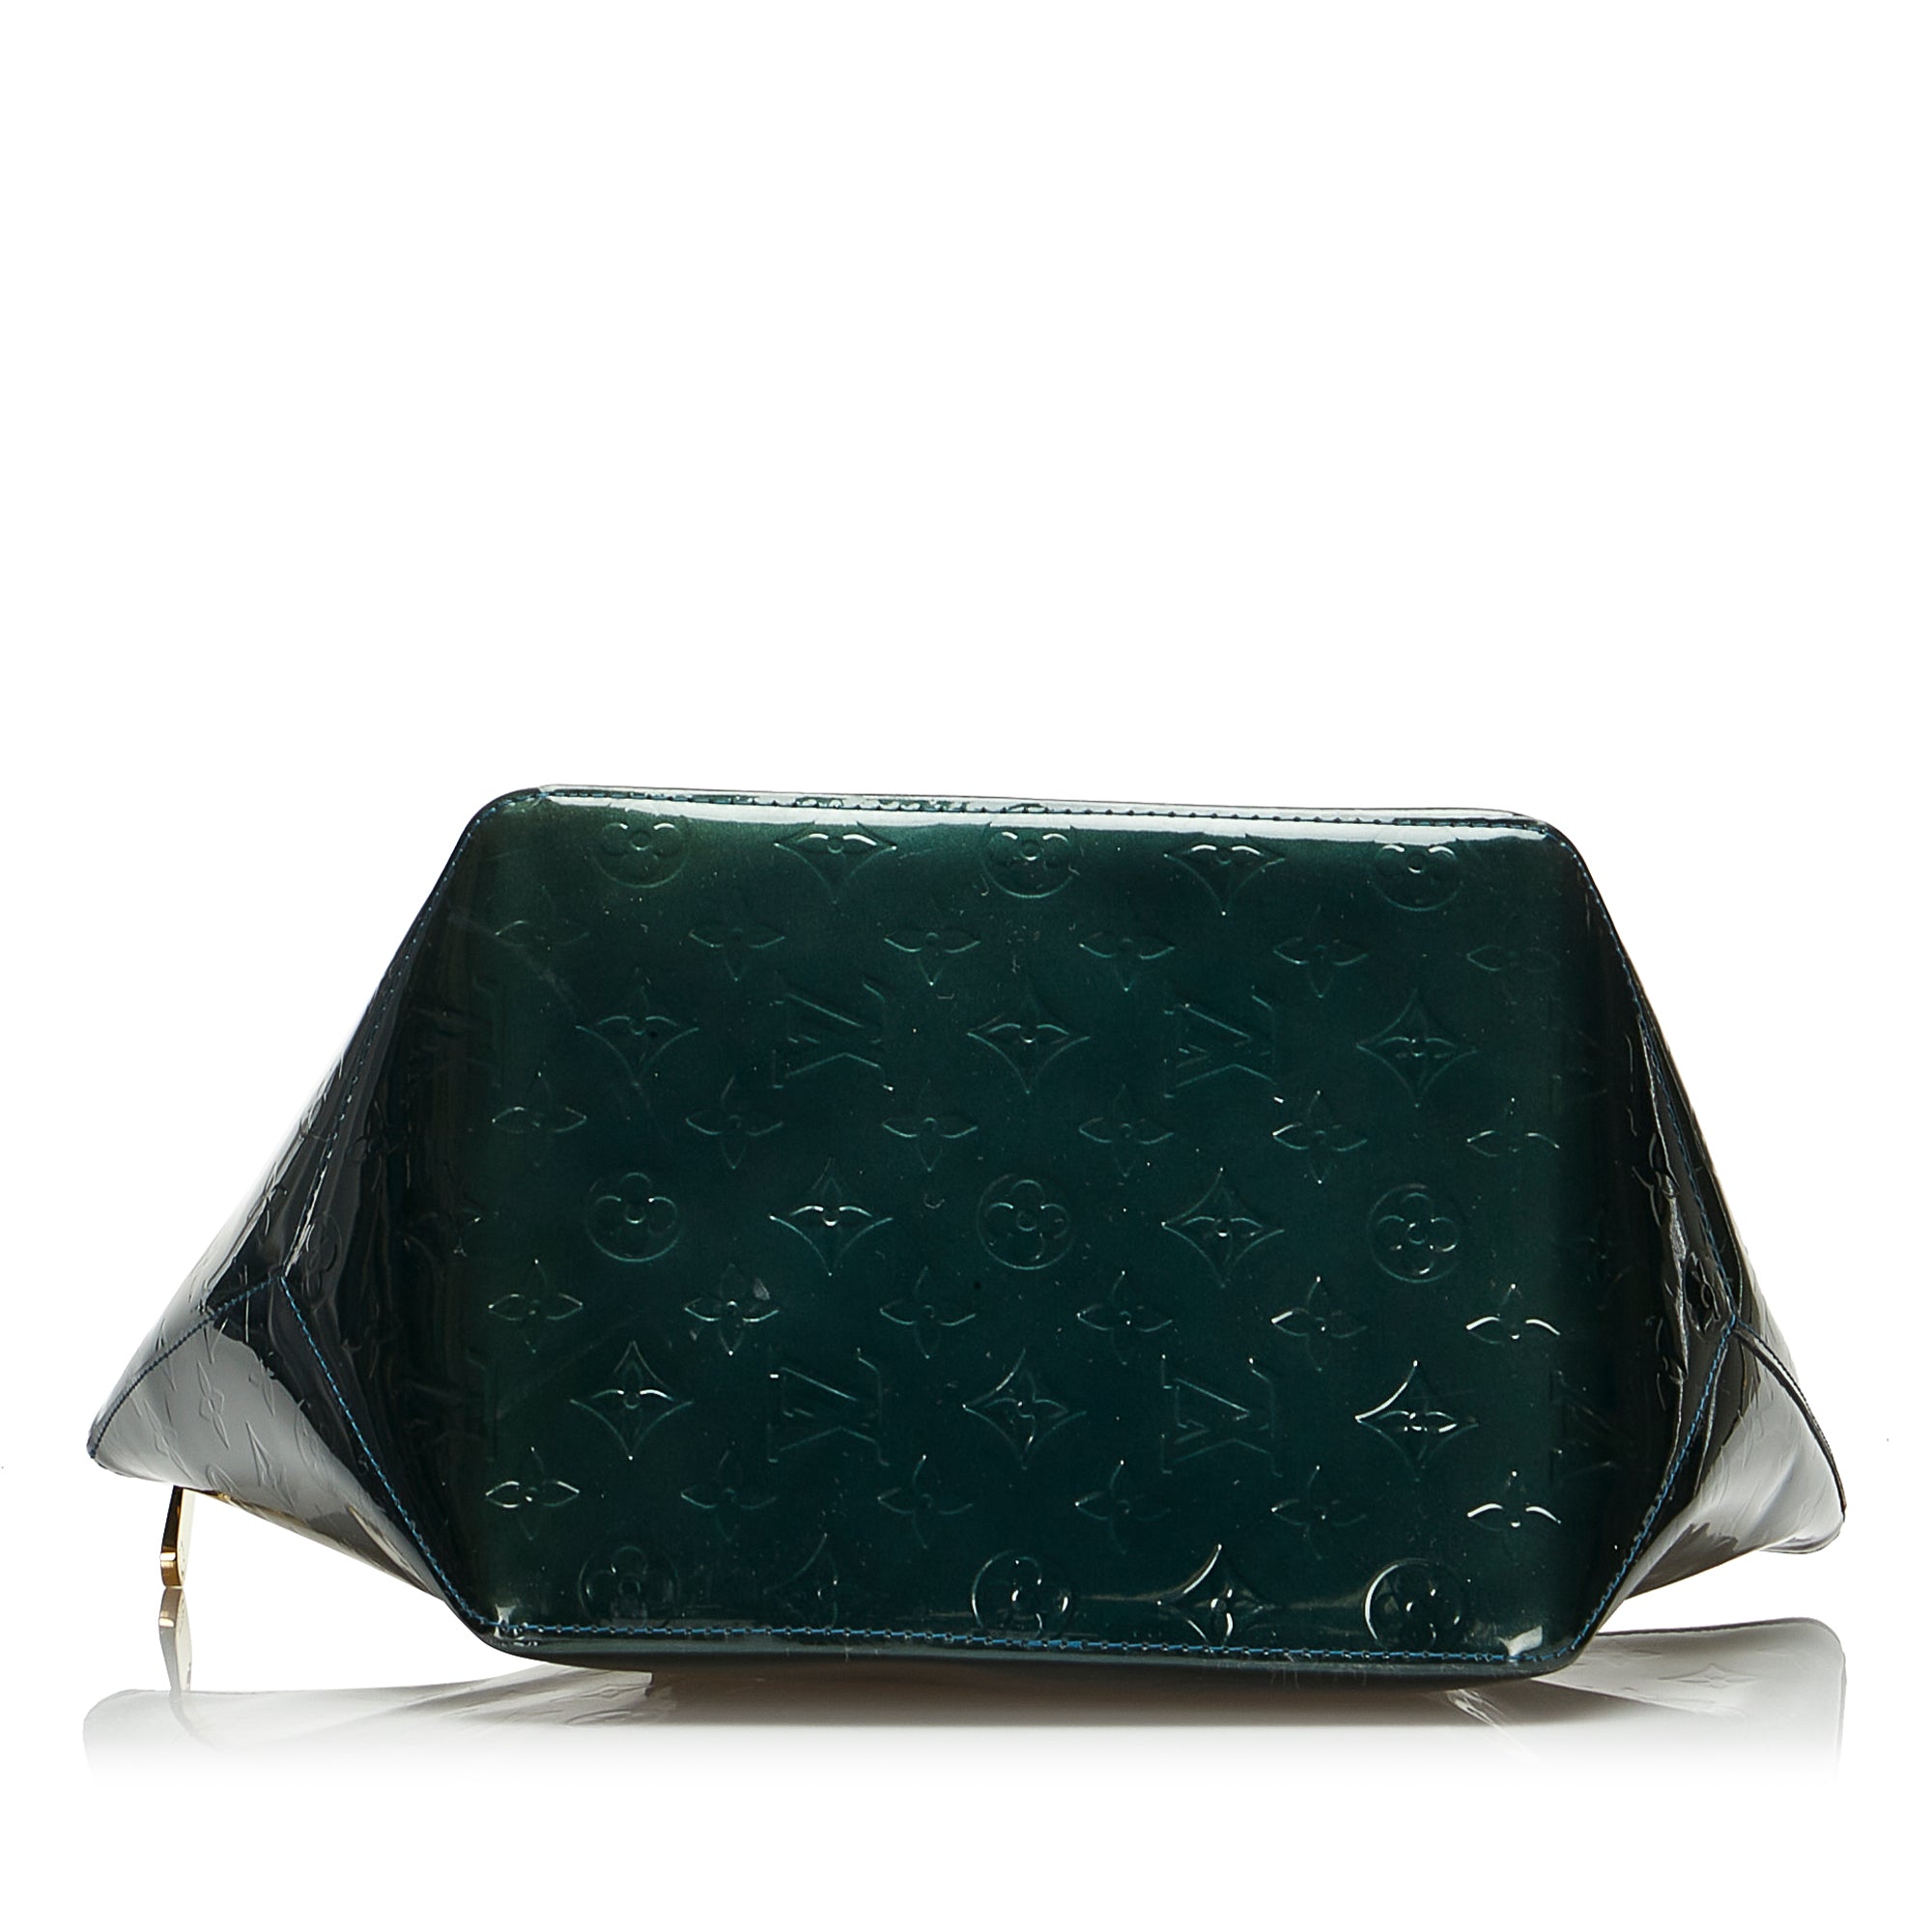 Louis Vuitton Melrose Patent Leather Handbag